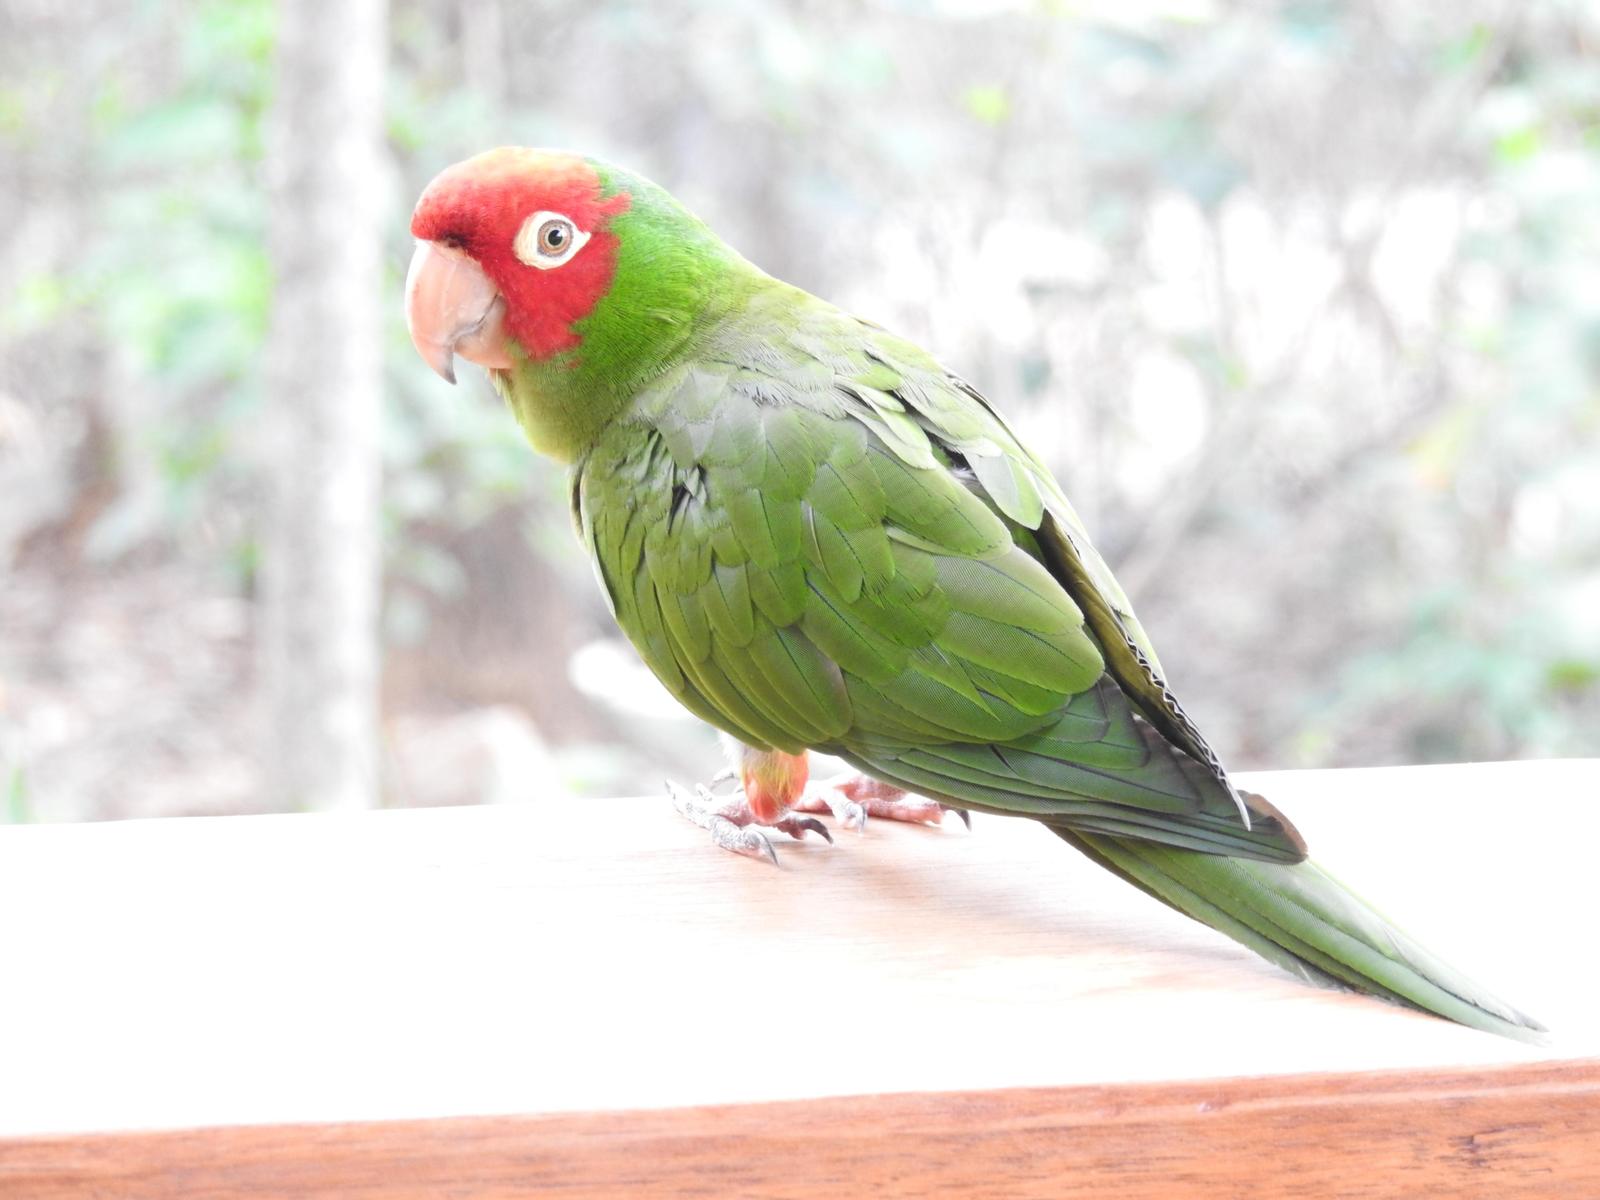 Red-masked Parakeet Photo by John Licharson